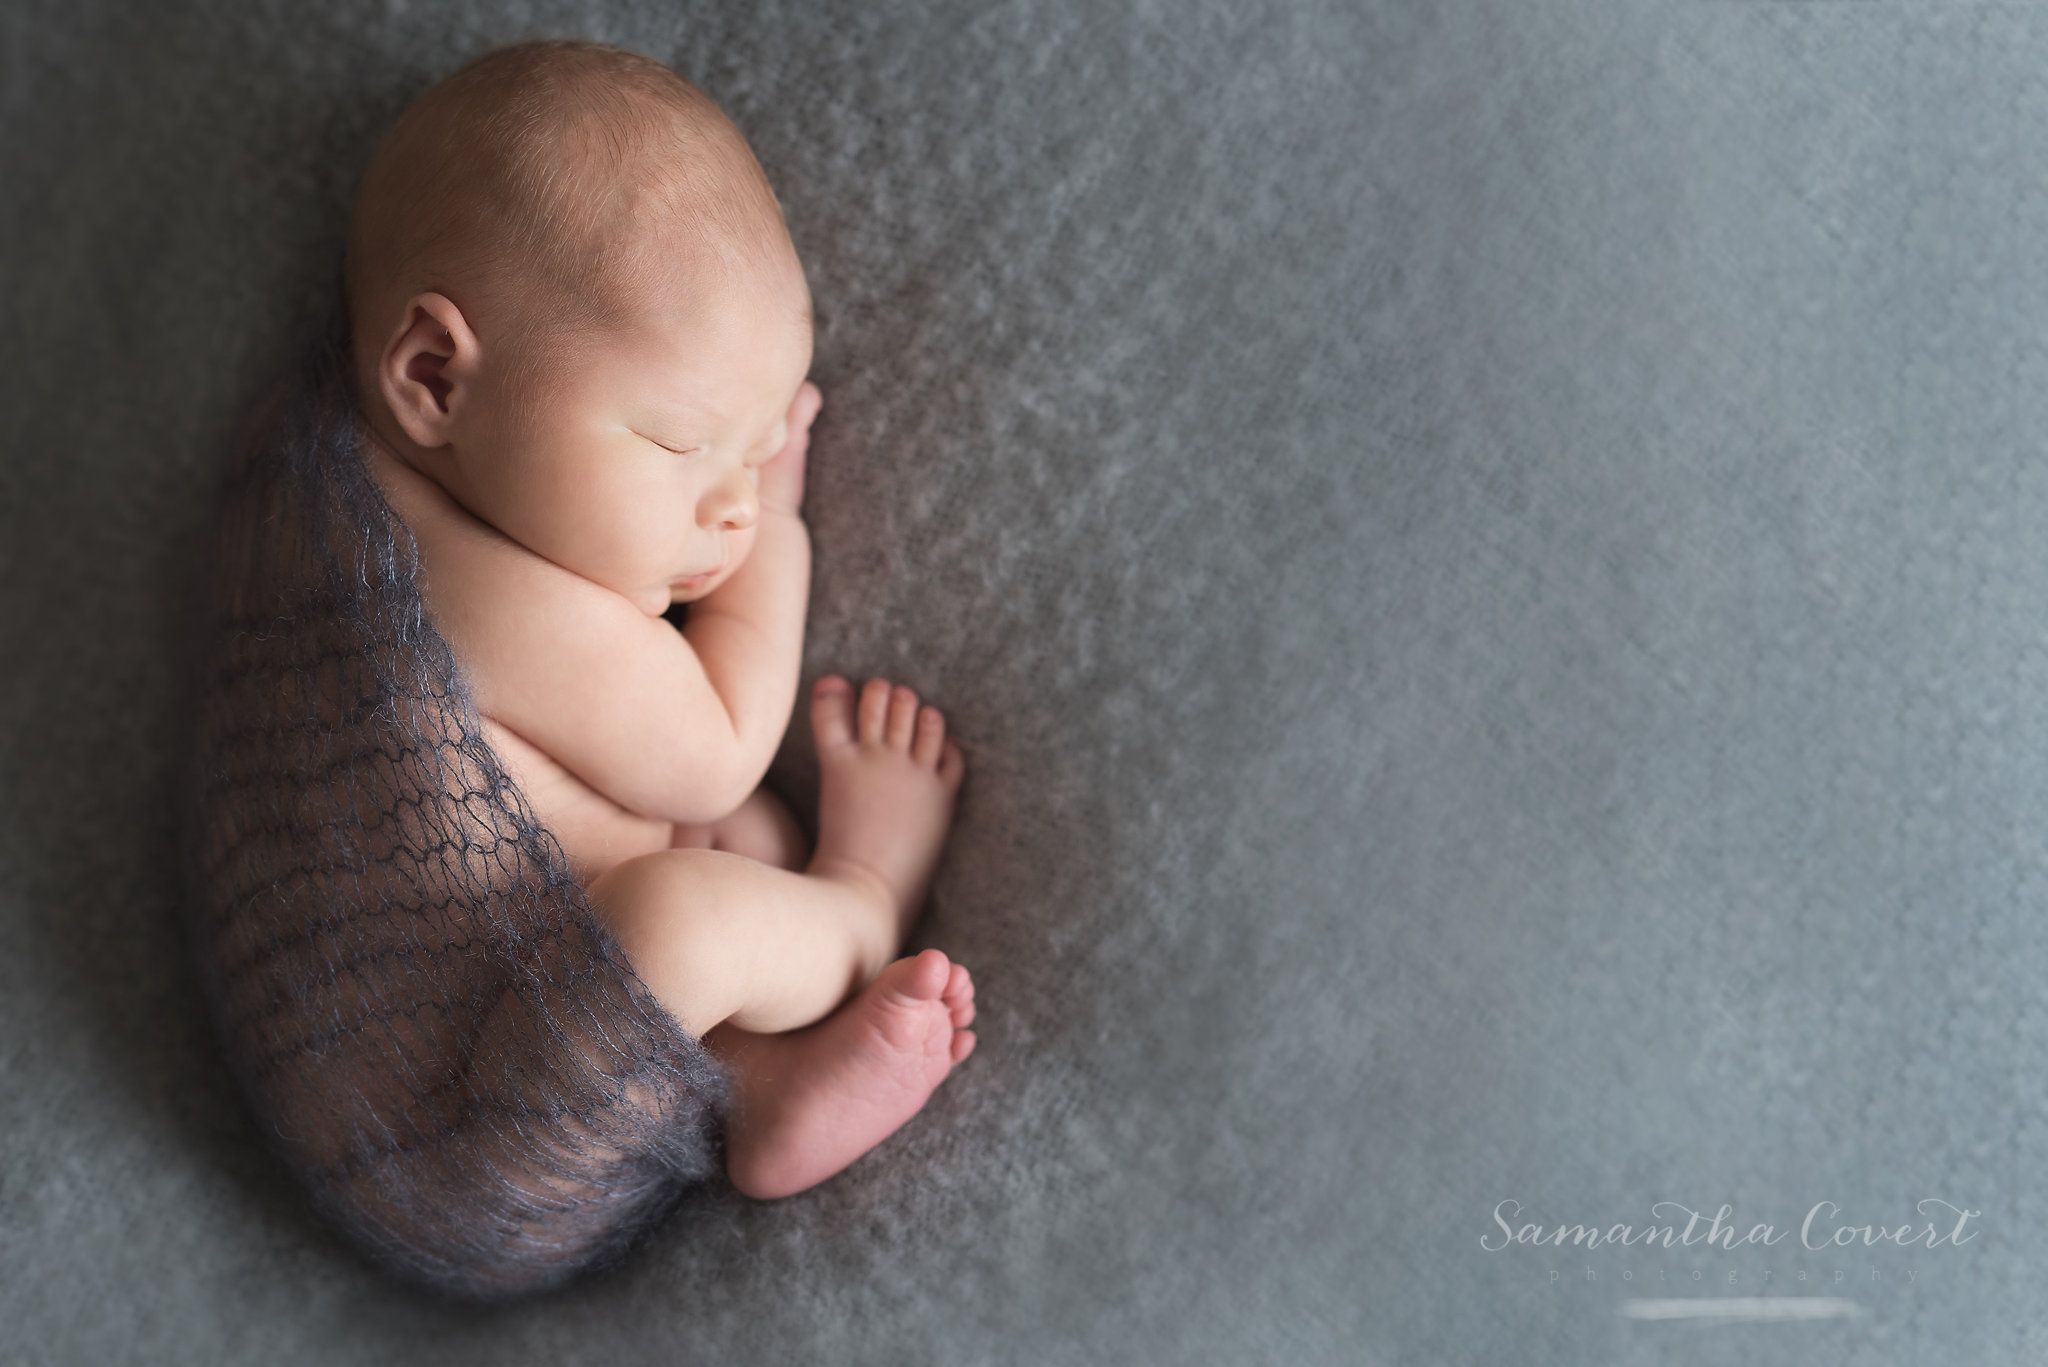 Halifax Newborn Photographer | Samantha Covert Photography